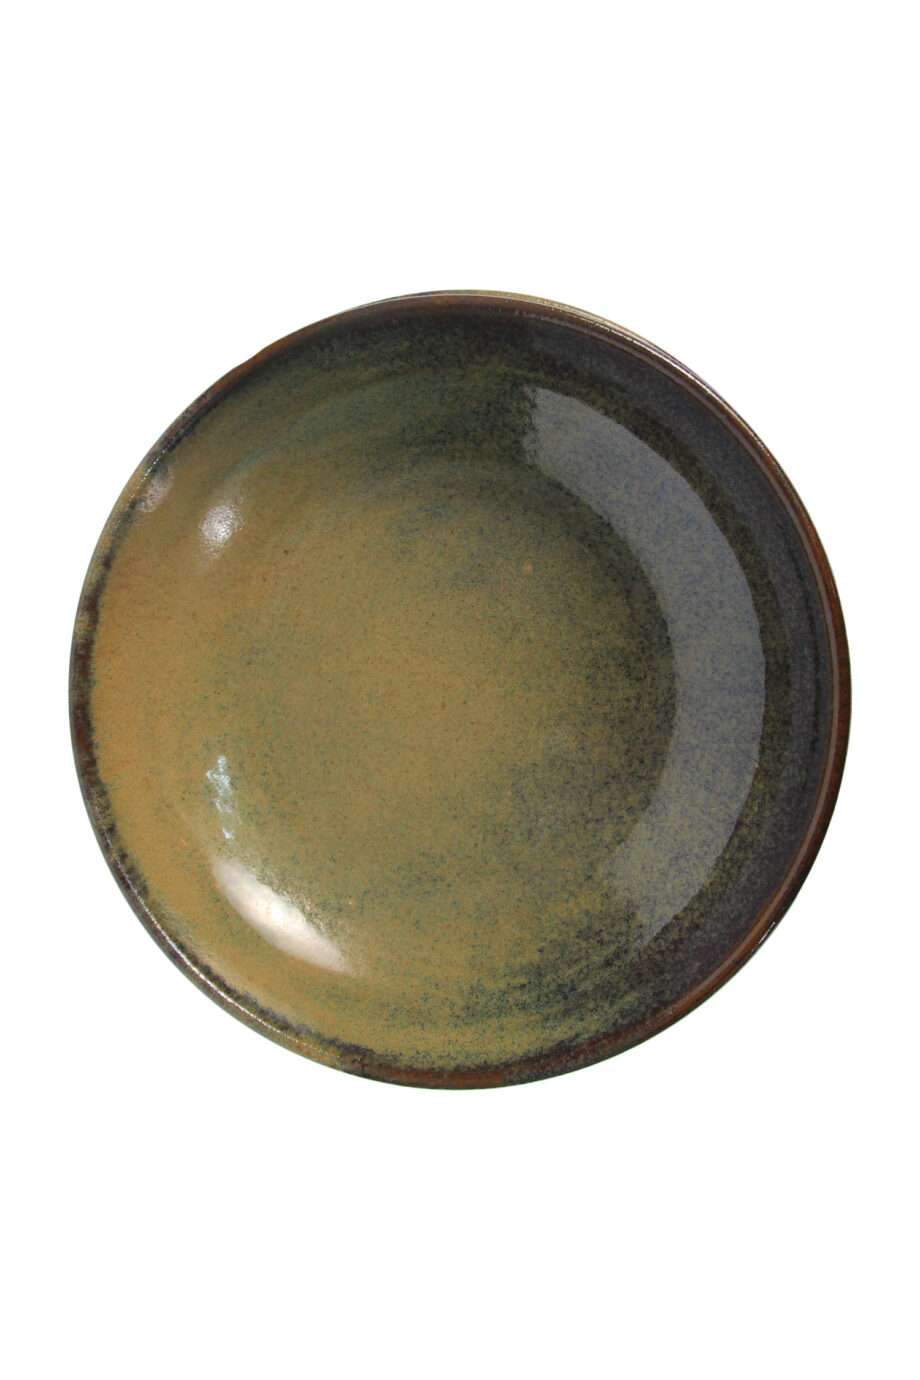 salad bowl ochre glaze ceramic large